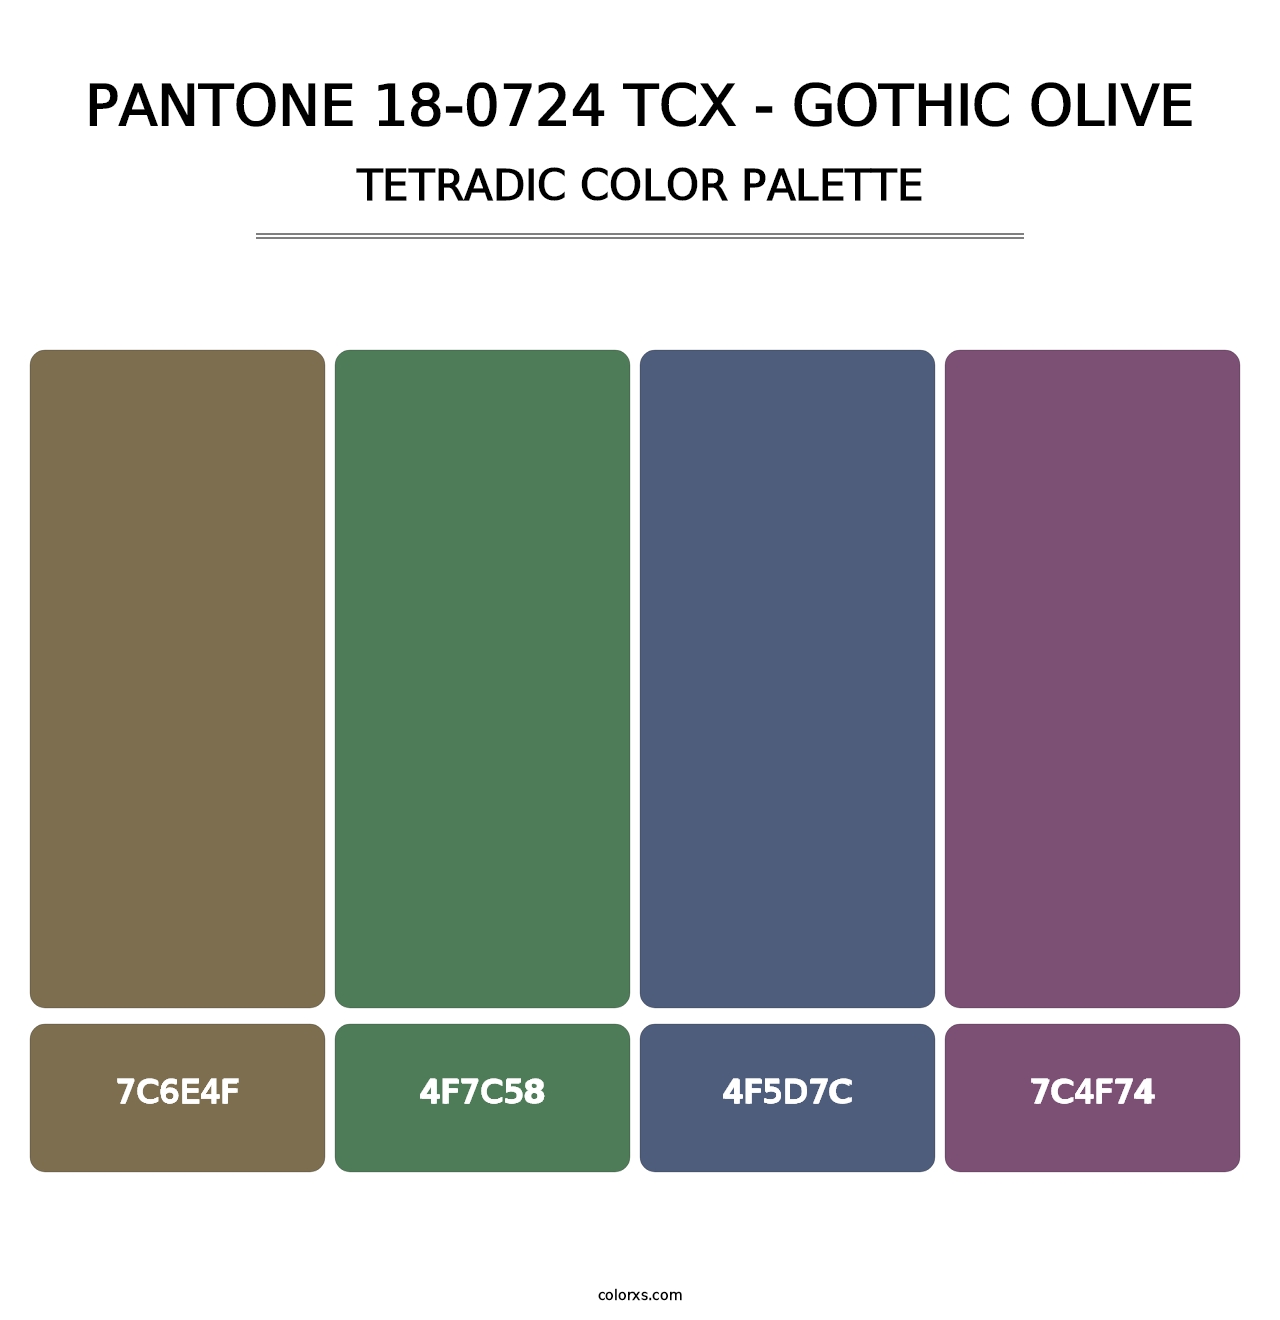 PANTONE 18-0724 TCX - Gothic Olive - Tetradic Color Palette